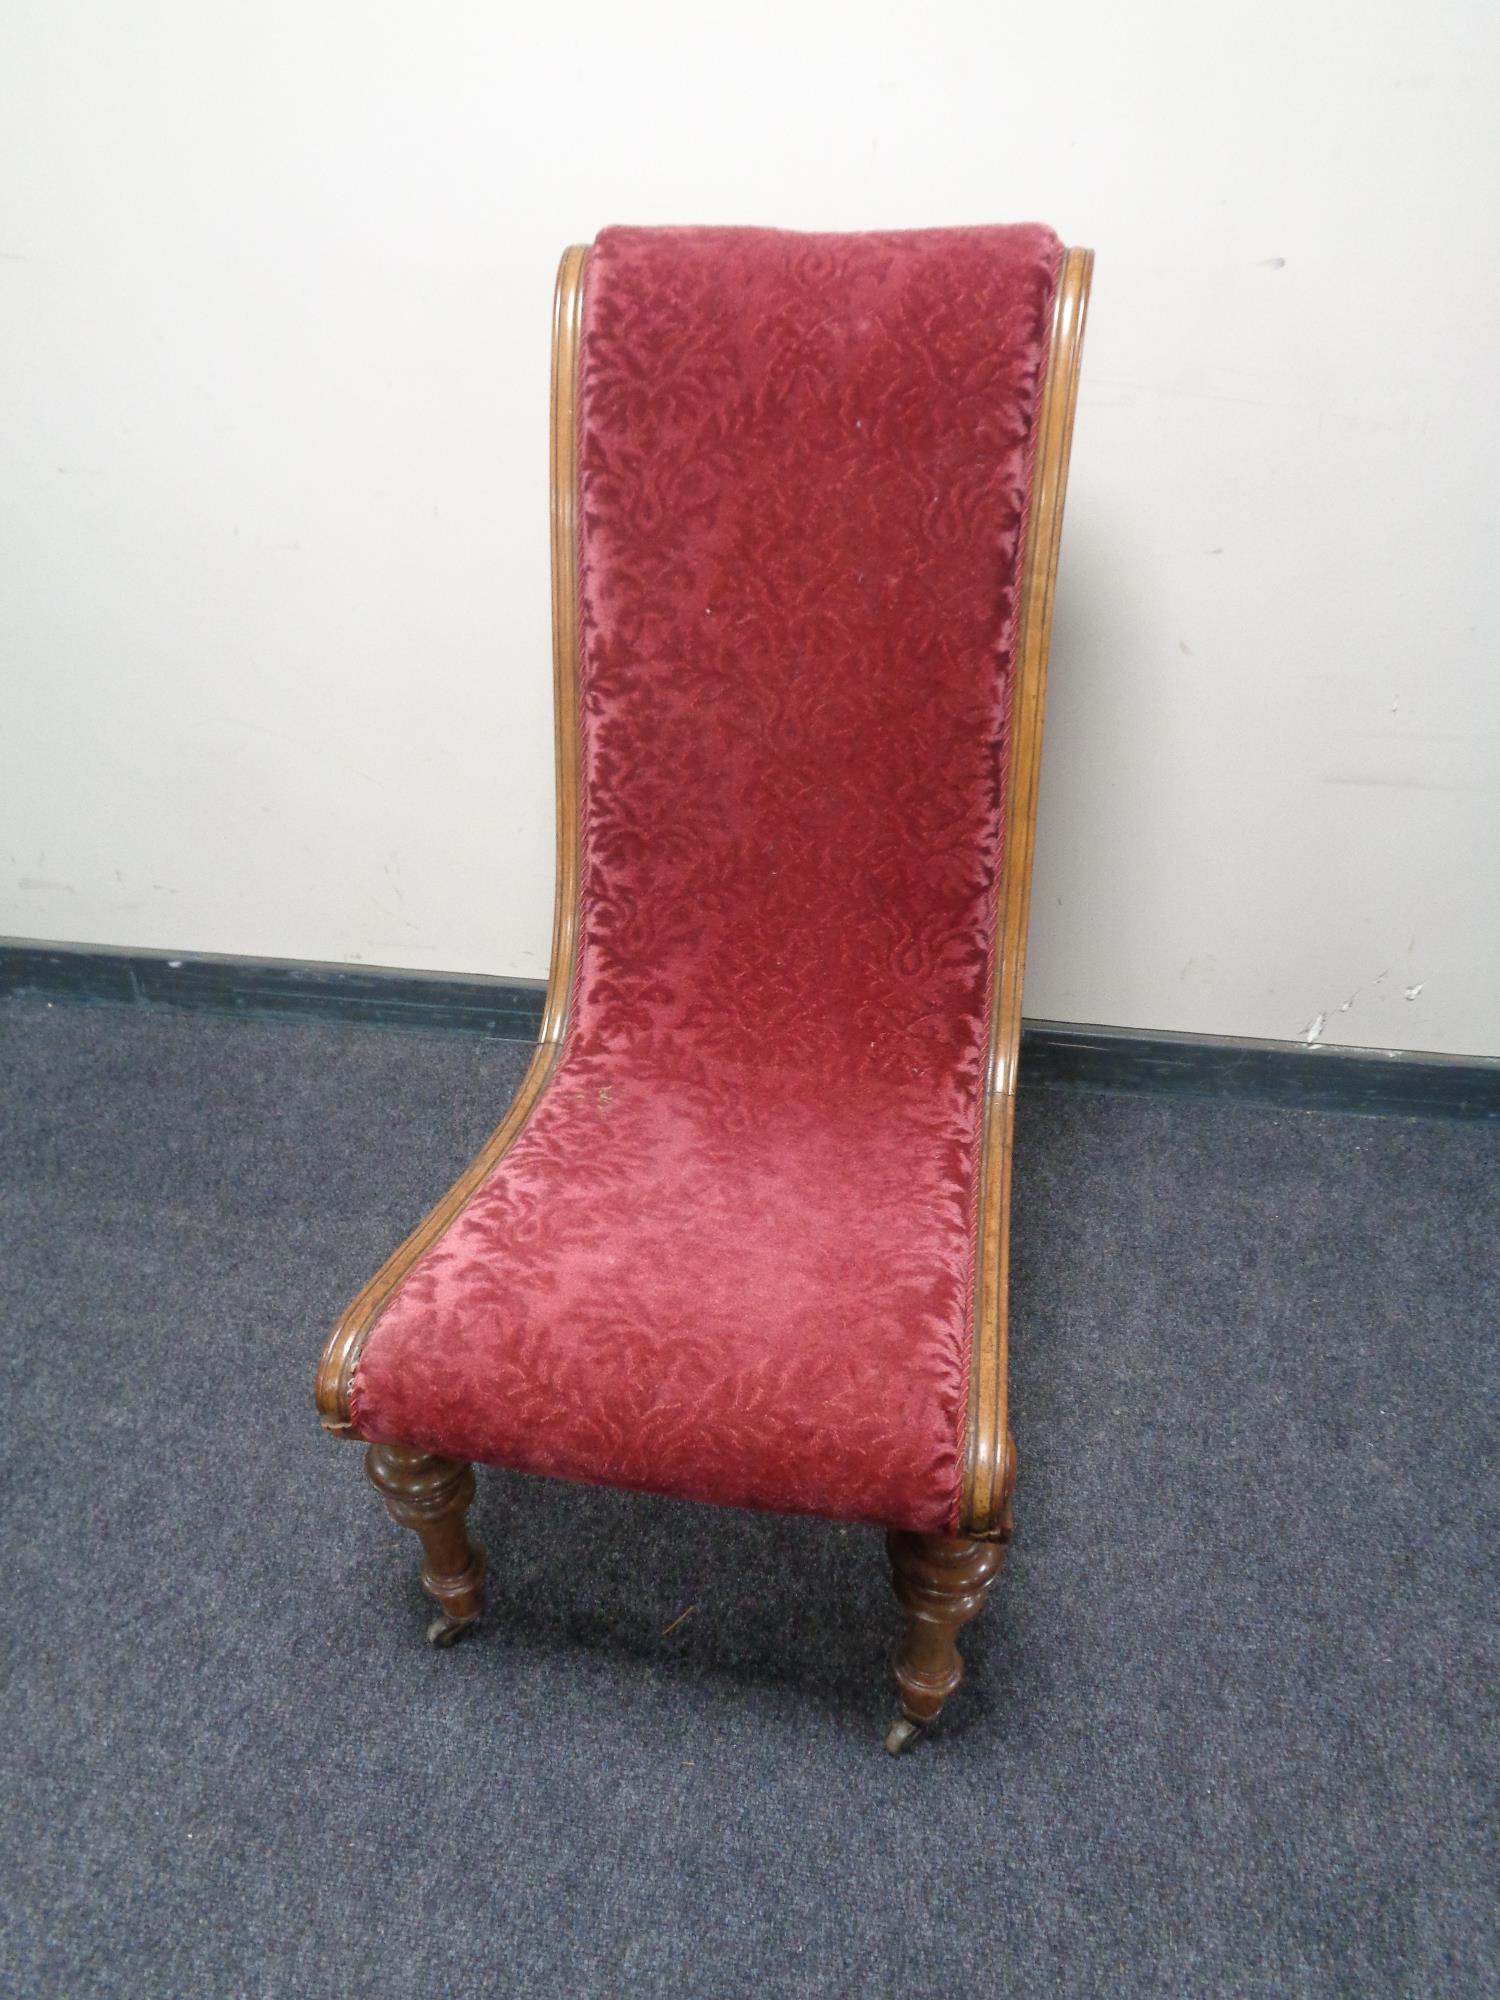 An antique mahogany framed nursing chair